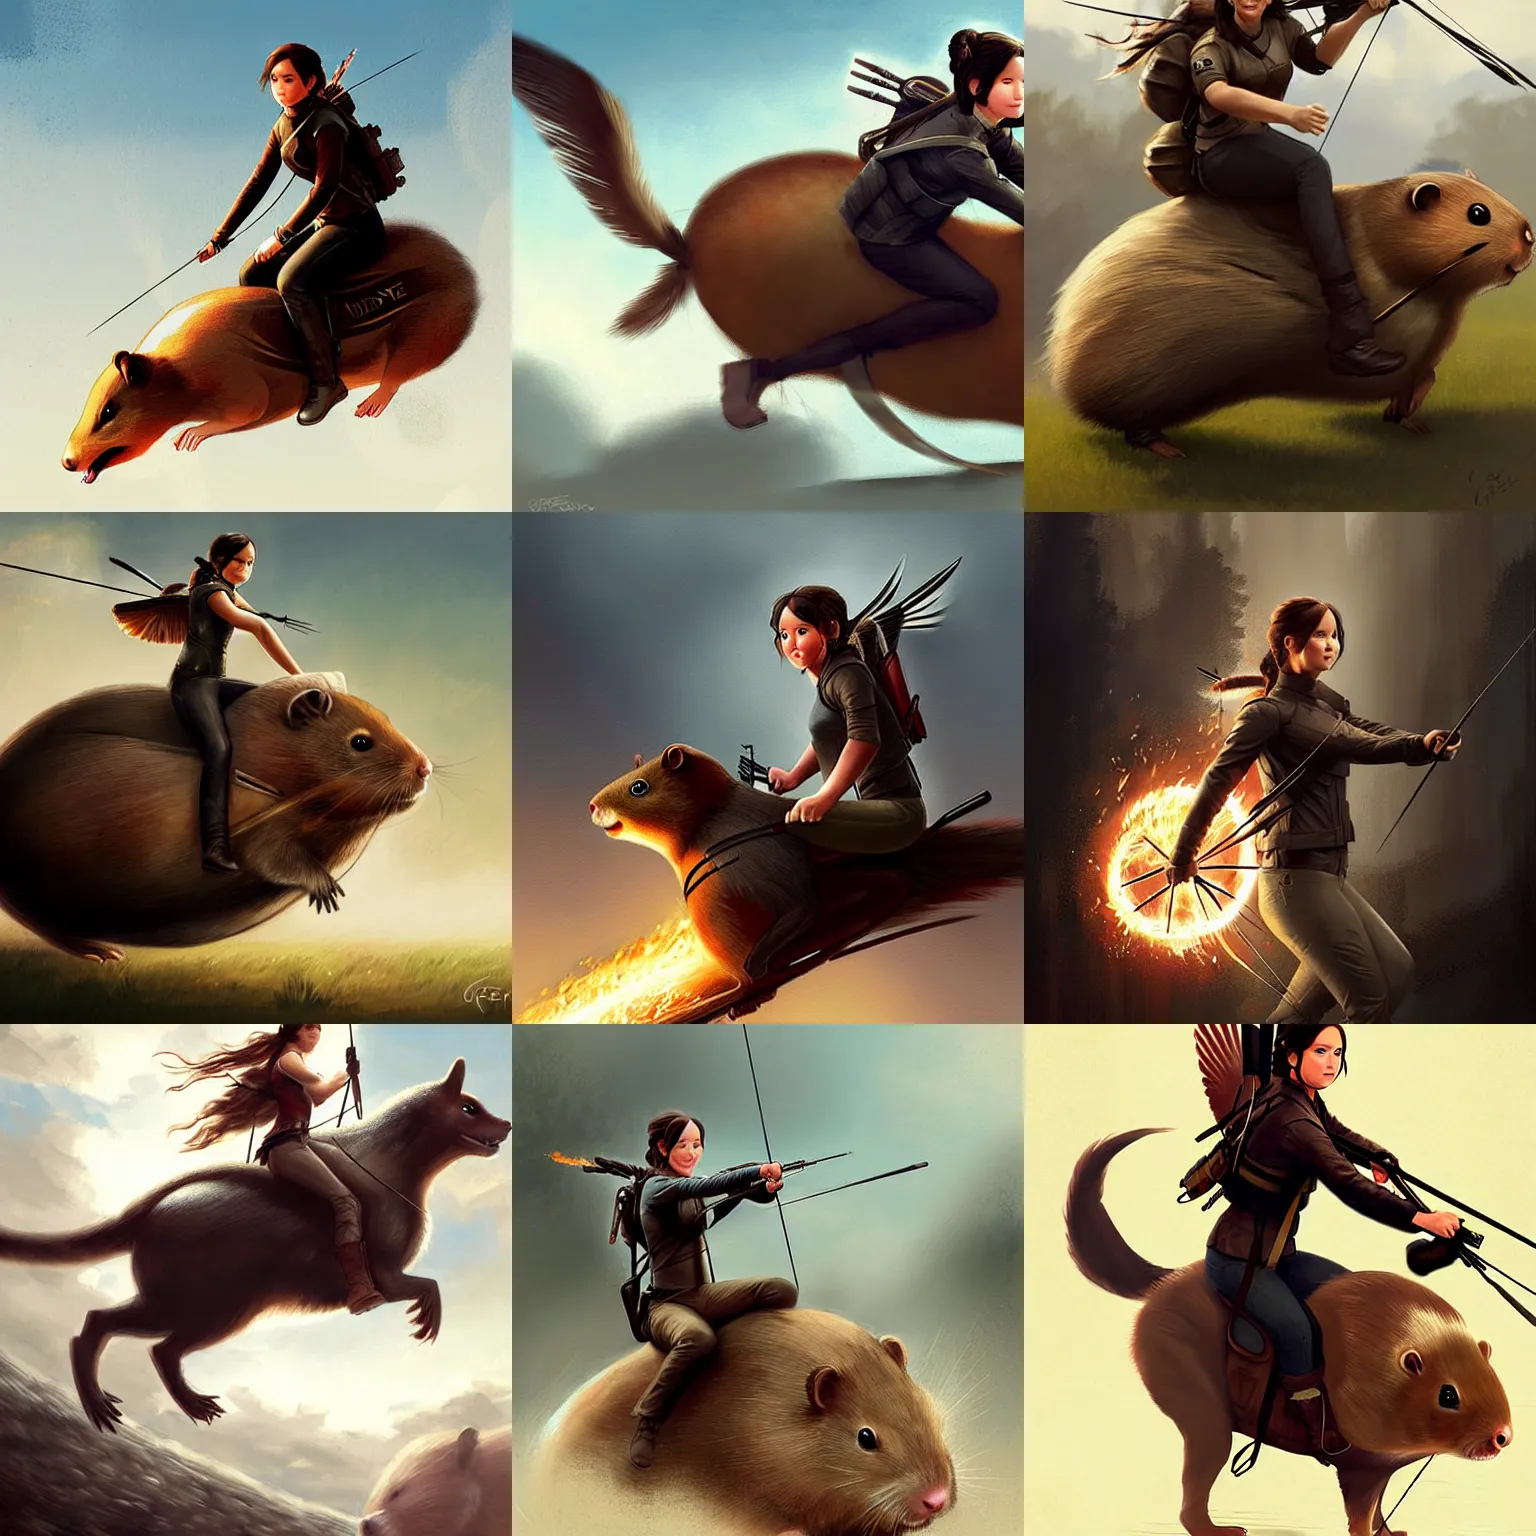 Prompt: katniss everdeen riding on the back of a giant hamster, digital art by greg rutkowski